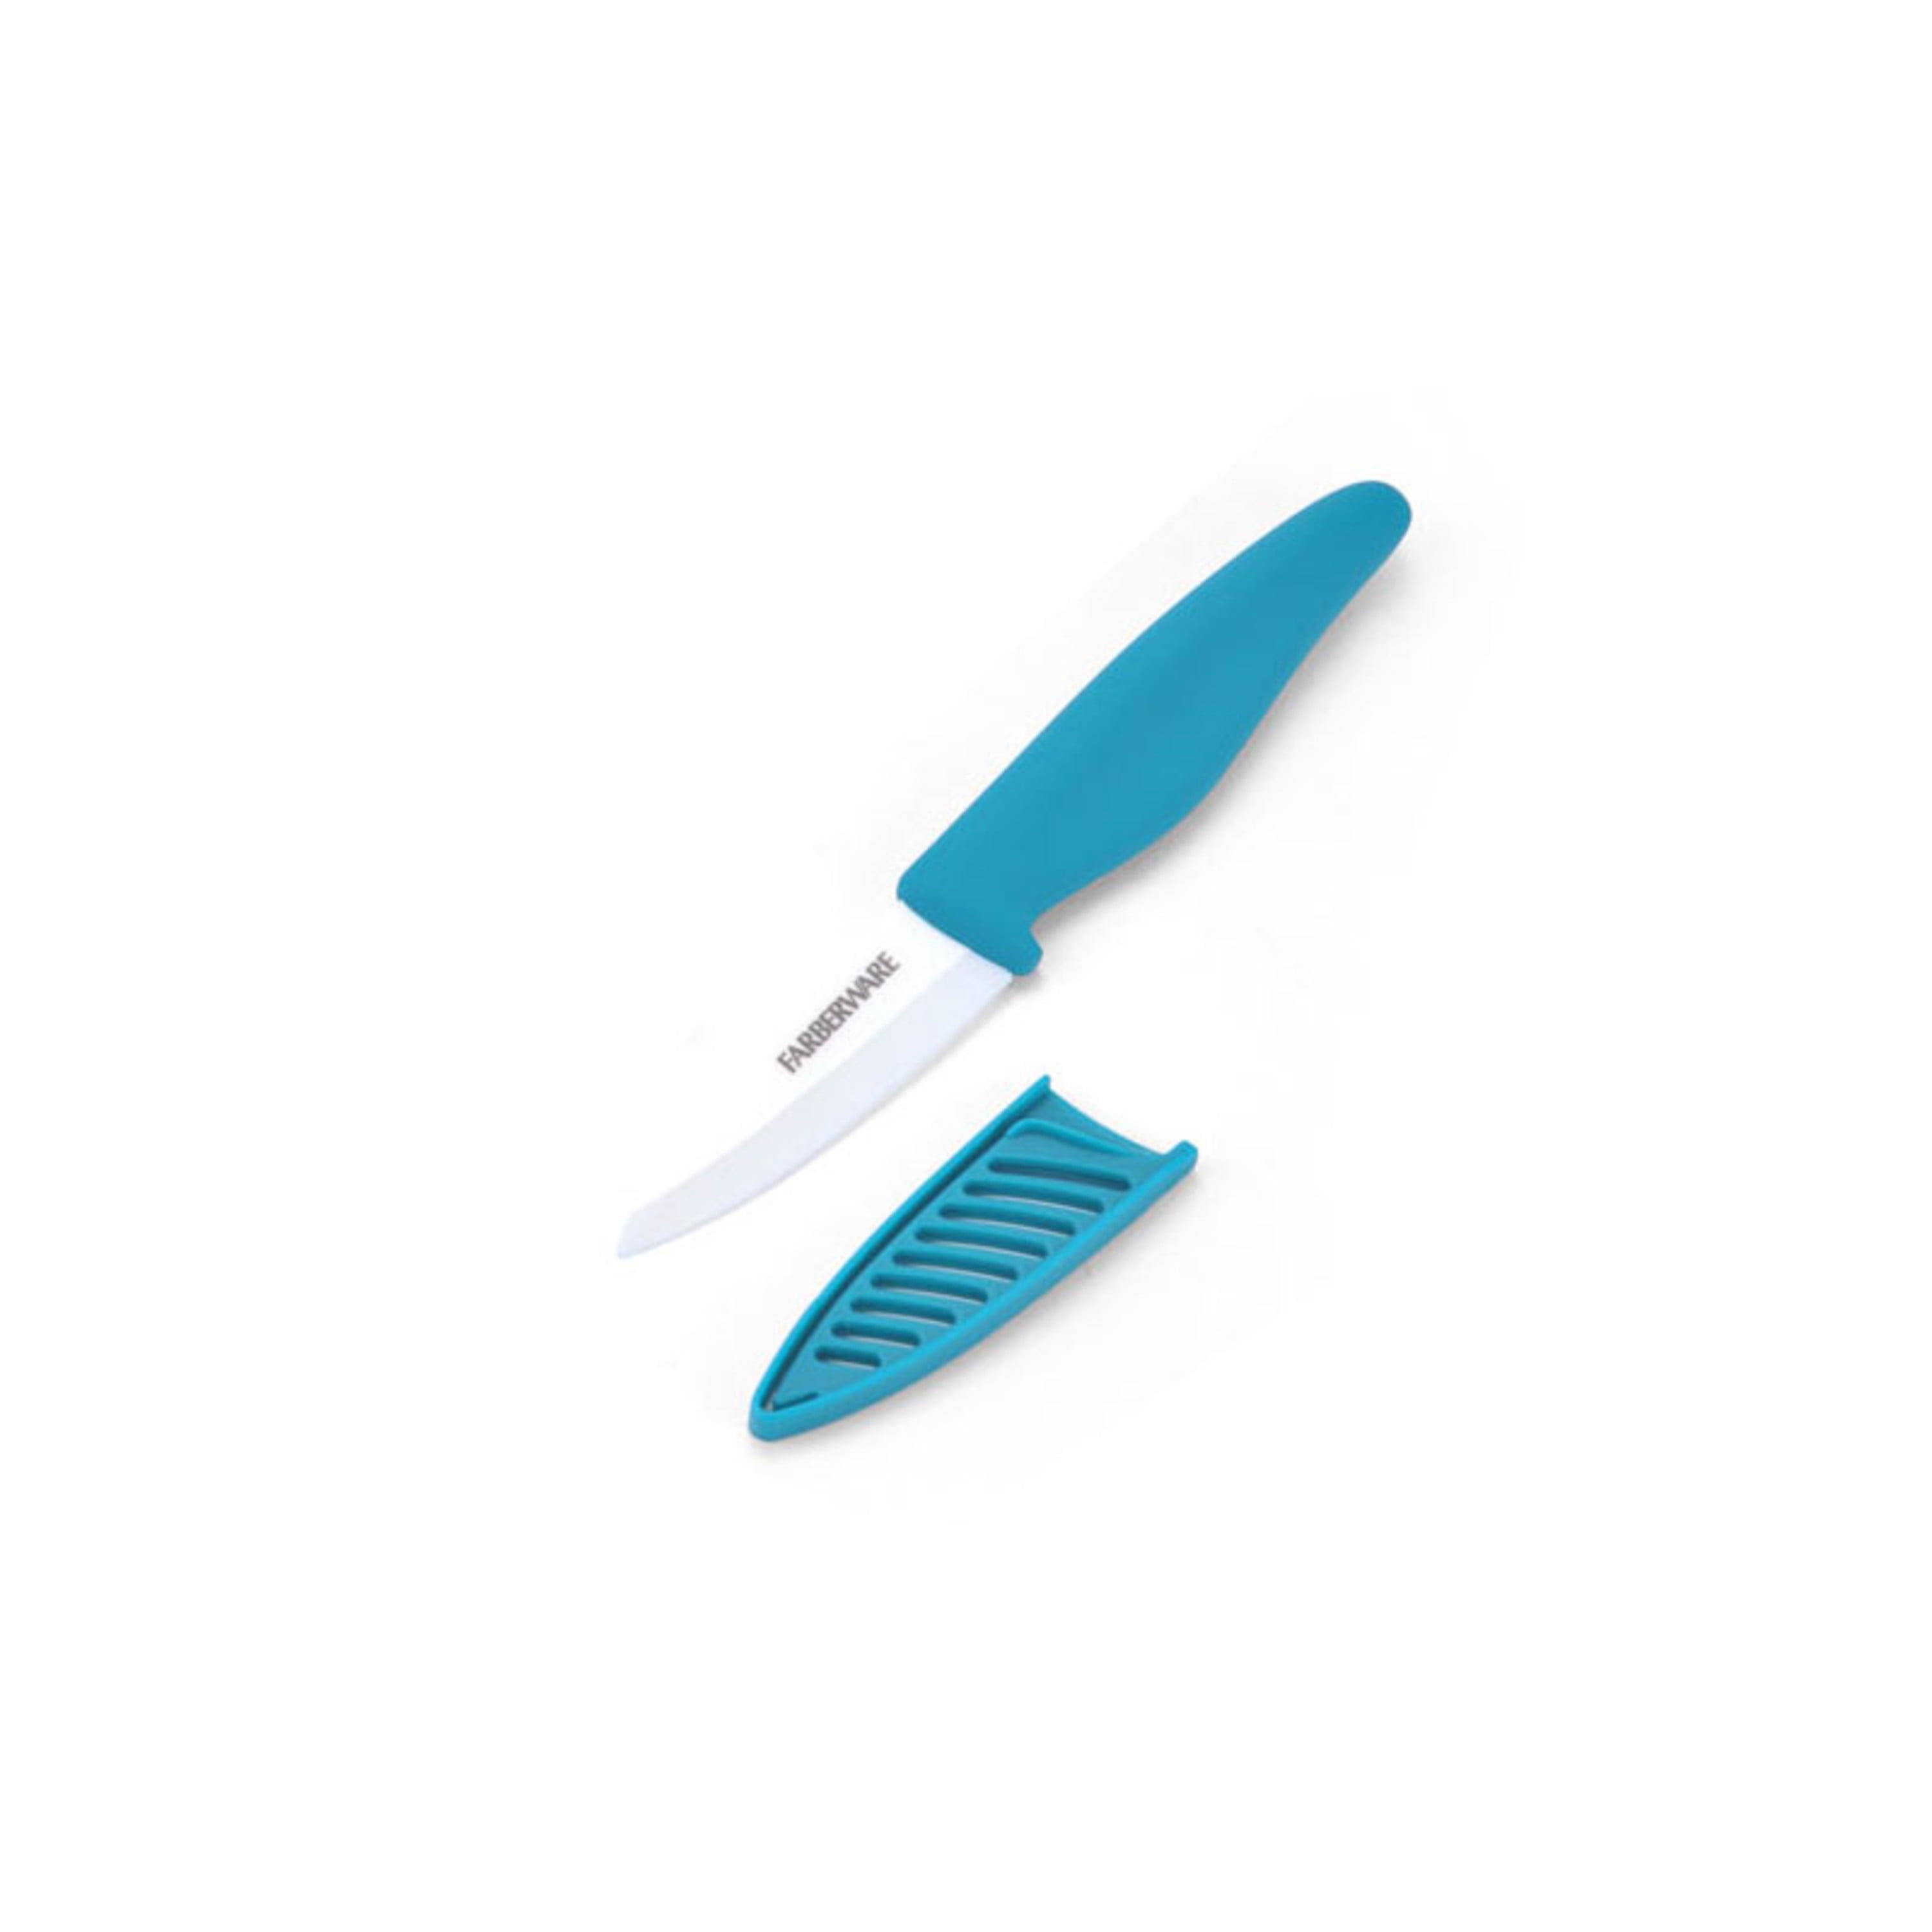 INNOVATIONwhite™ 3 Ceramic Paring Knife - White Z212 Blade with Non-Slip  Black Handle